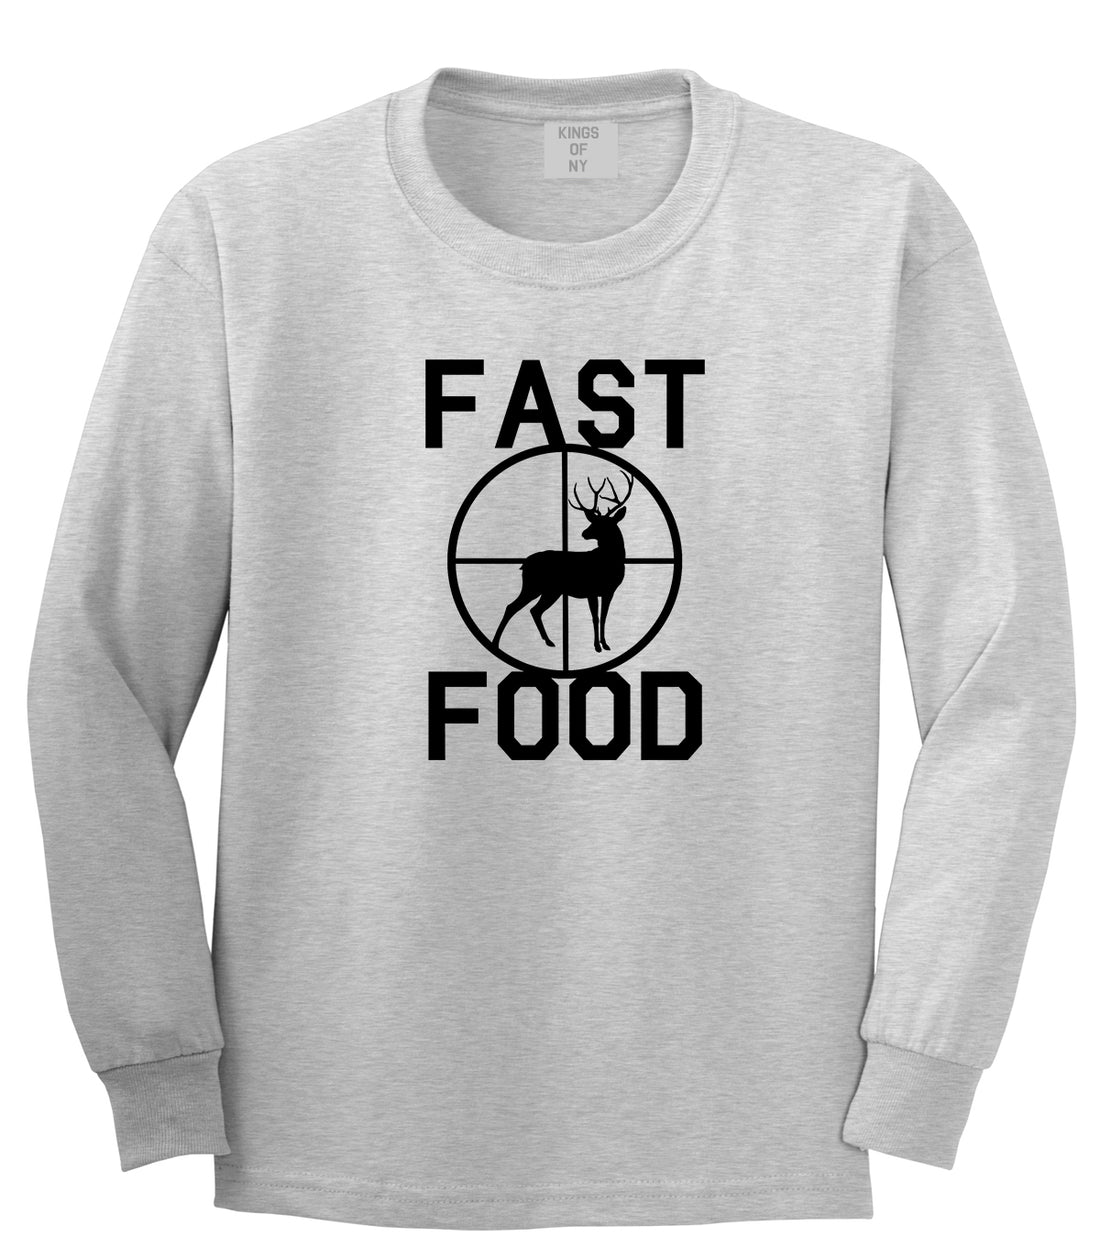 Fast Food Deer Hunting Mens Grey Long Sleeve T-Shirt by KINGS OF NY